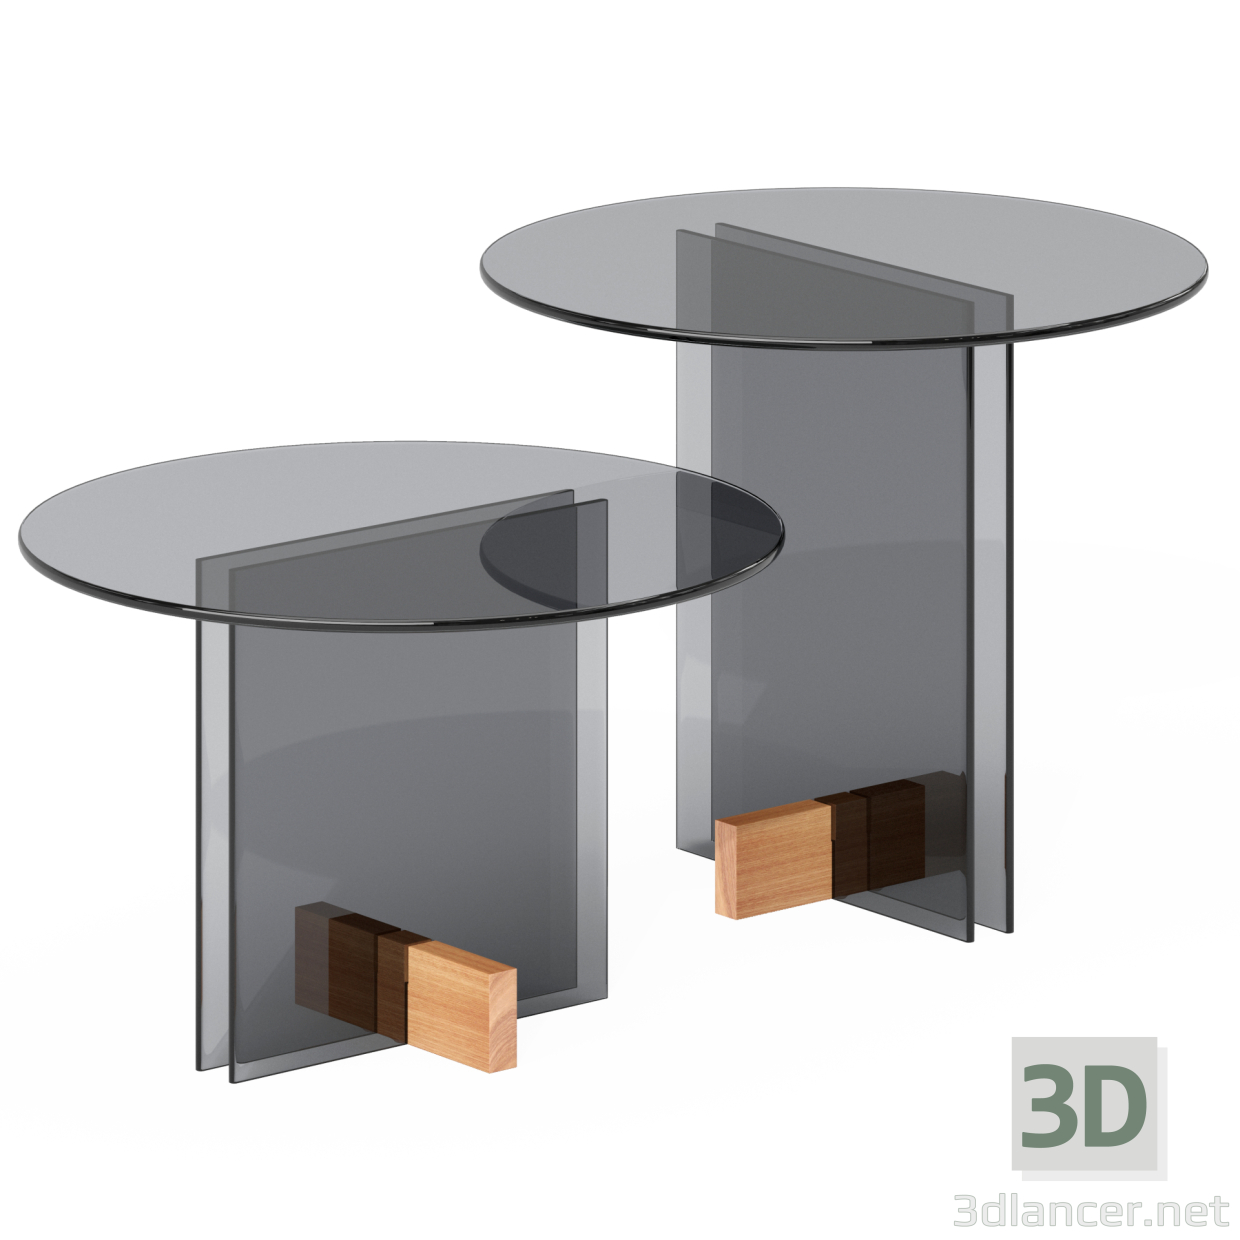 3 डी बेस टेबल मॉडल खरीद - रेंडर